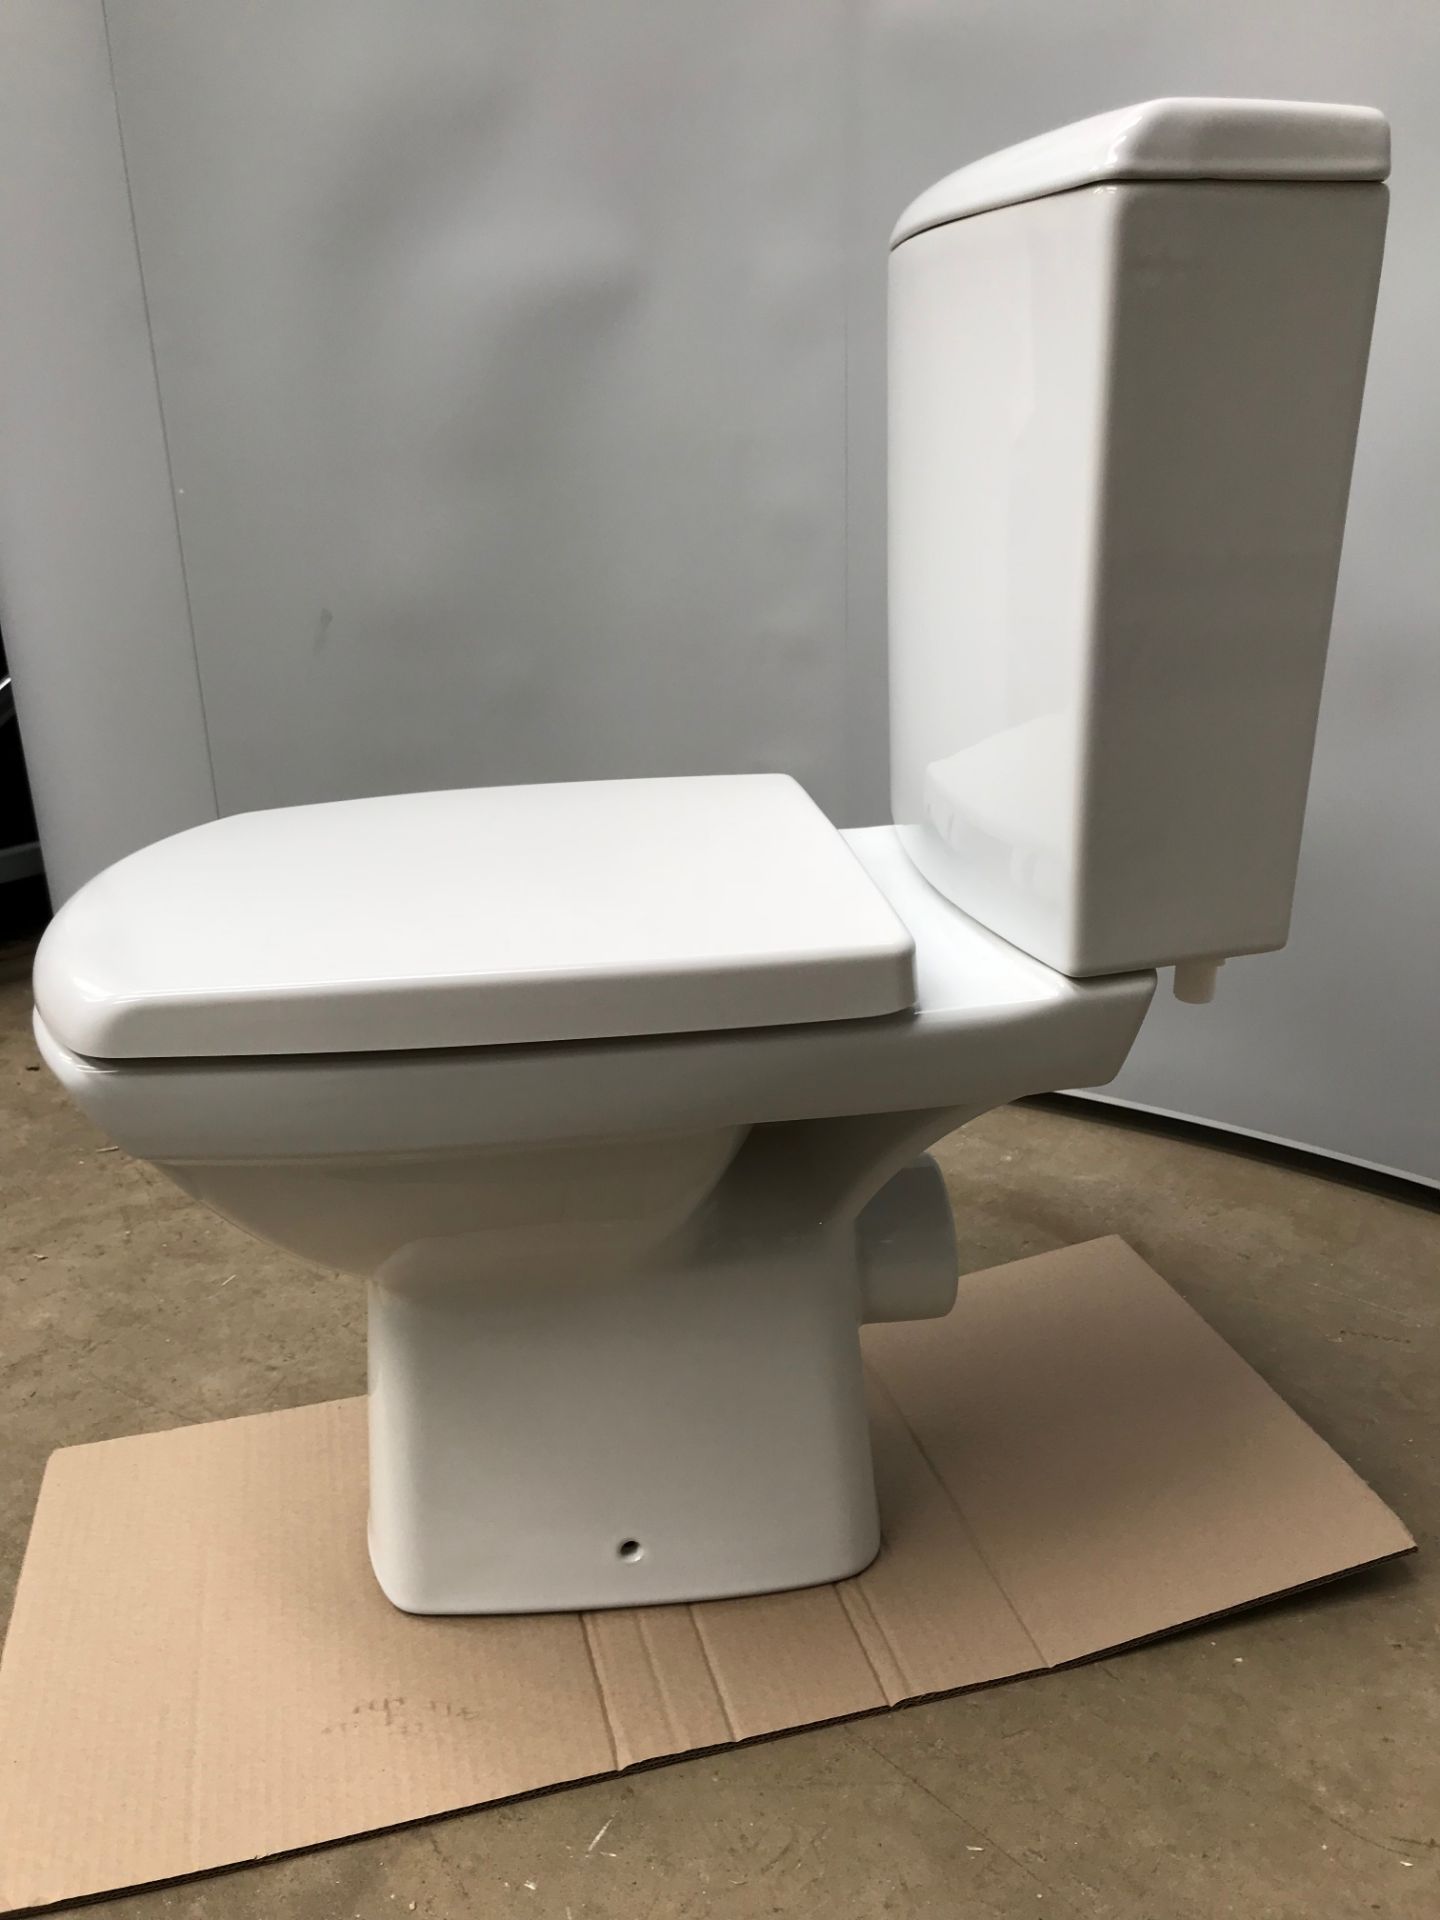 1 x Navassa Close Coupled Toilet with Soft Closing Seat - Bild 3 aus 7